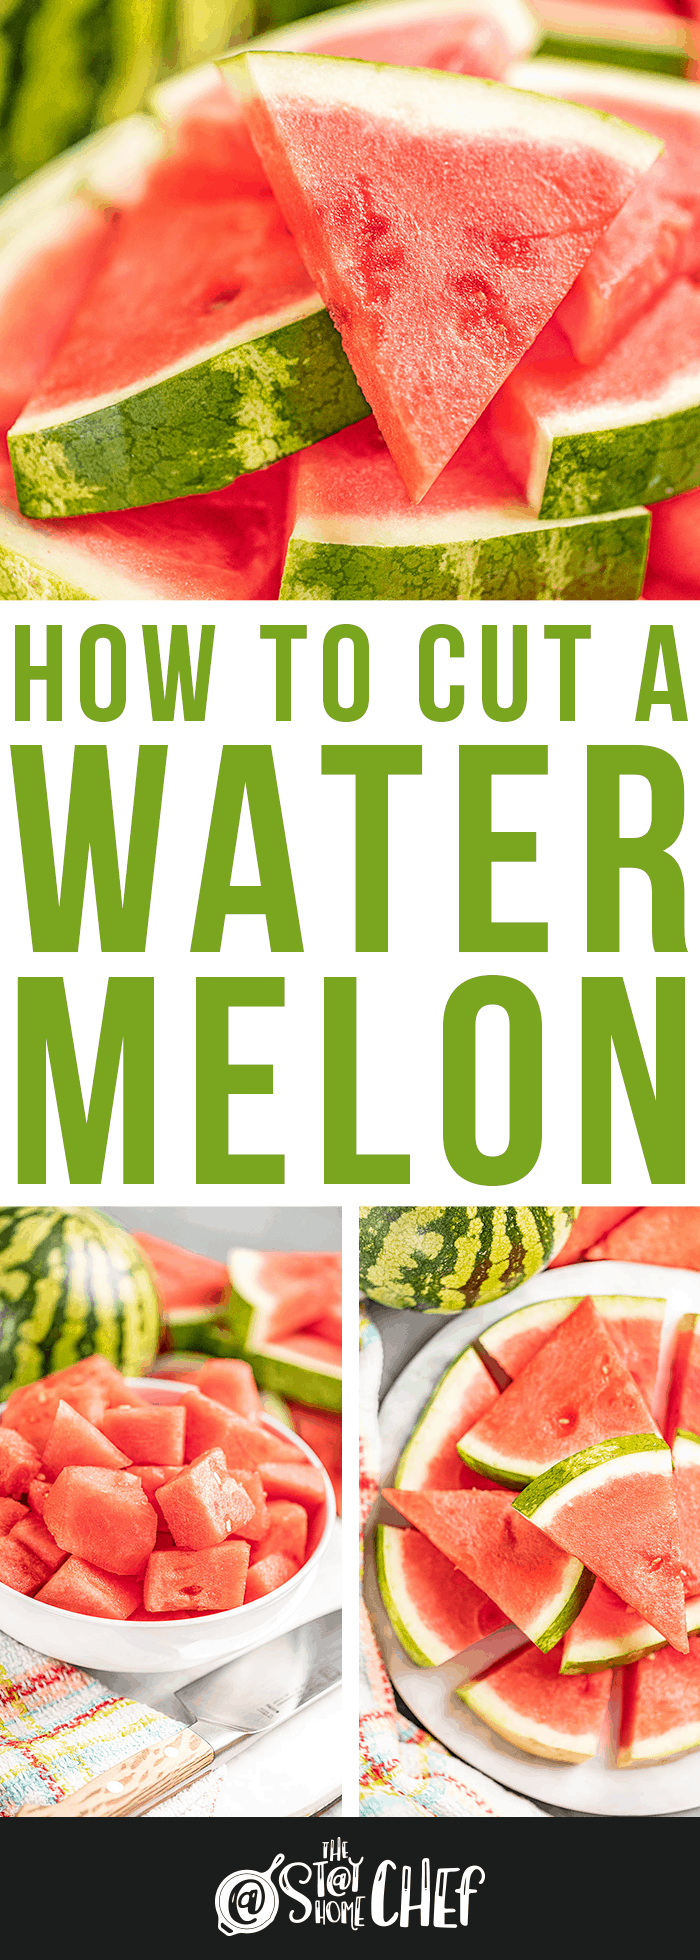 How to Cut a Watermelon com - 23